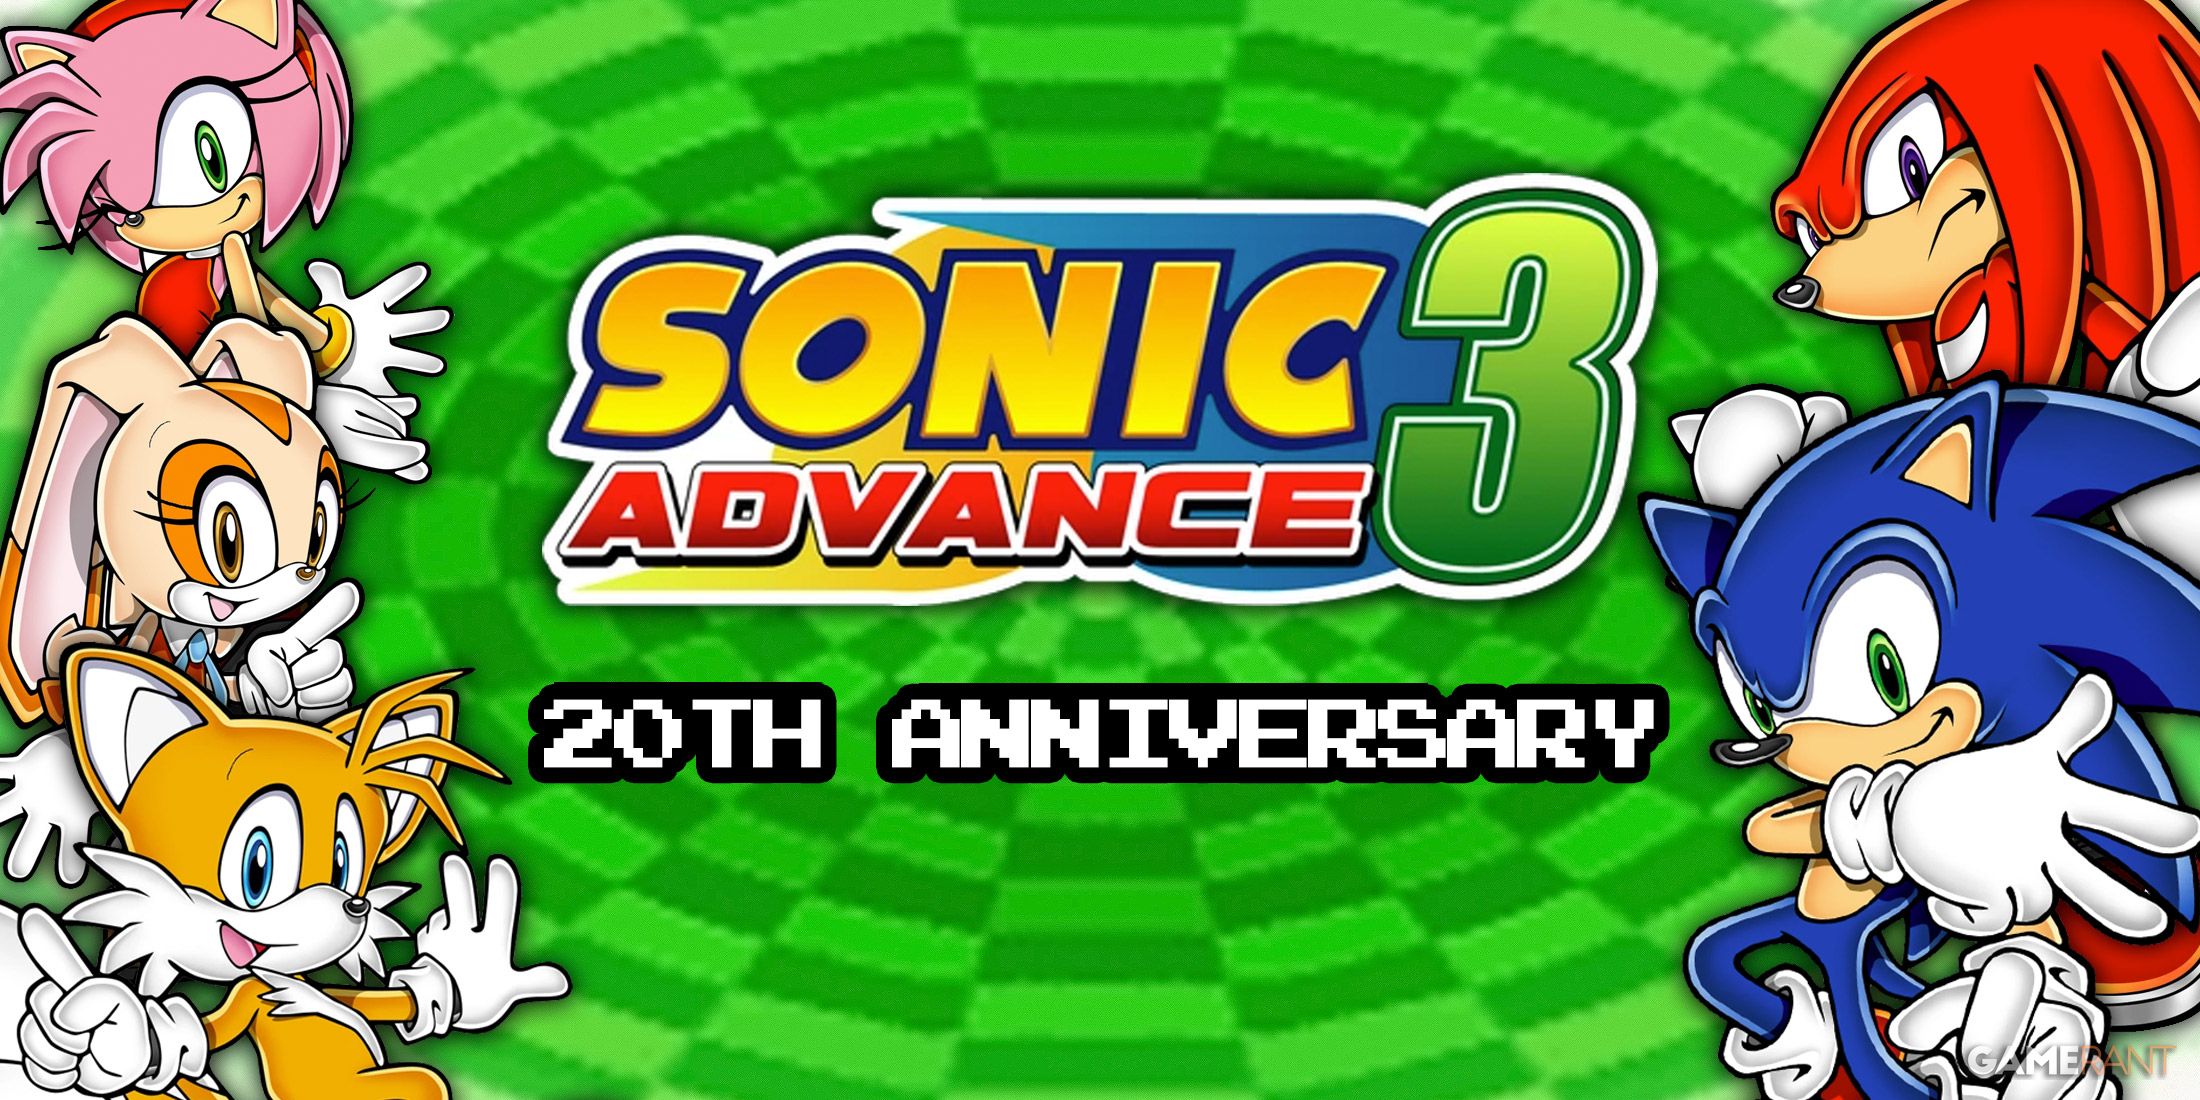 Sonic Advance 3 20th Anniversary Main